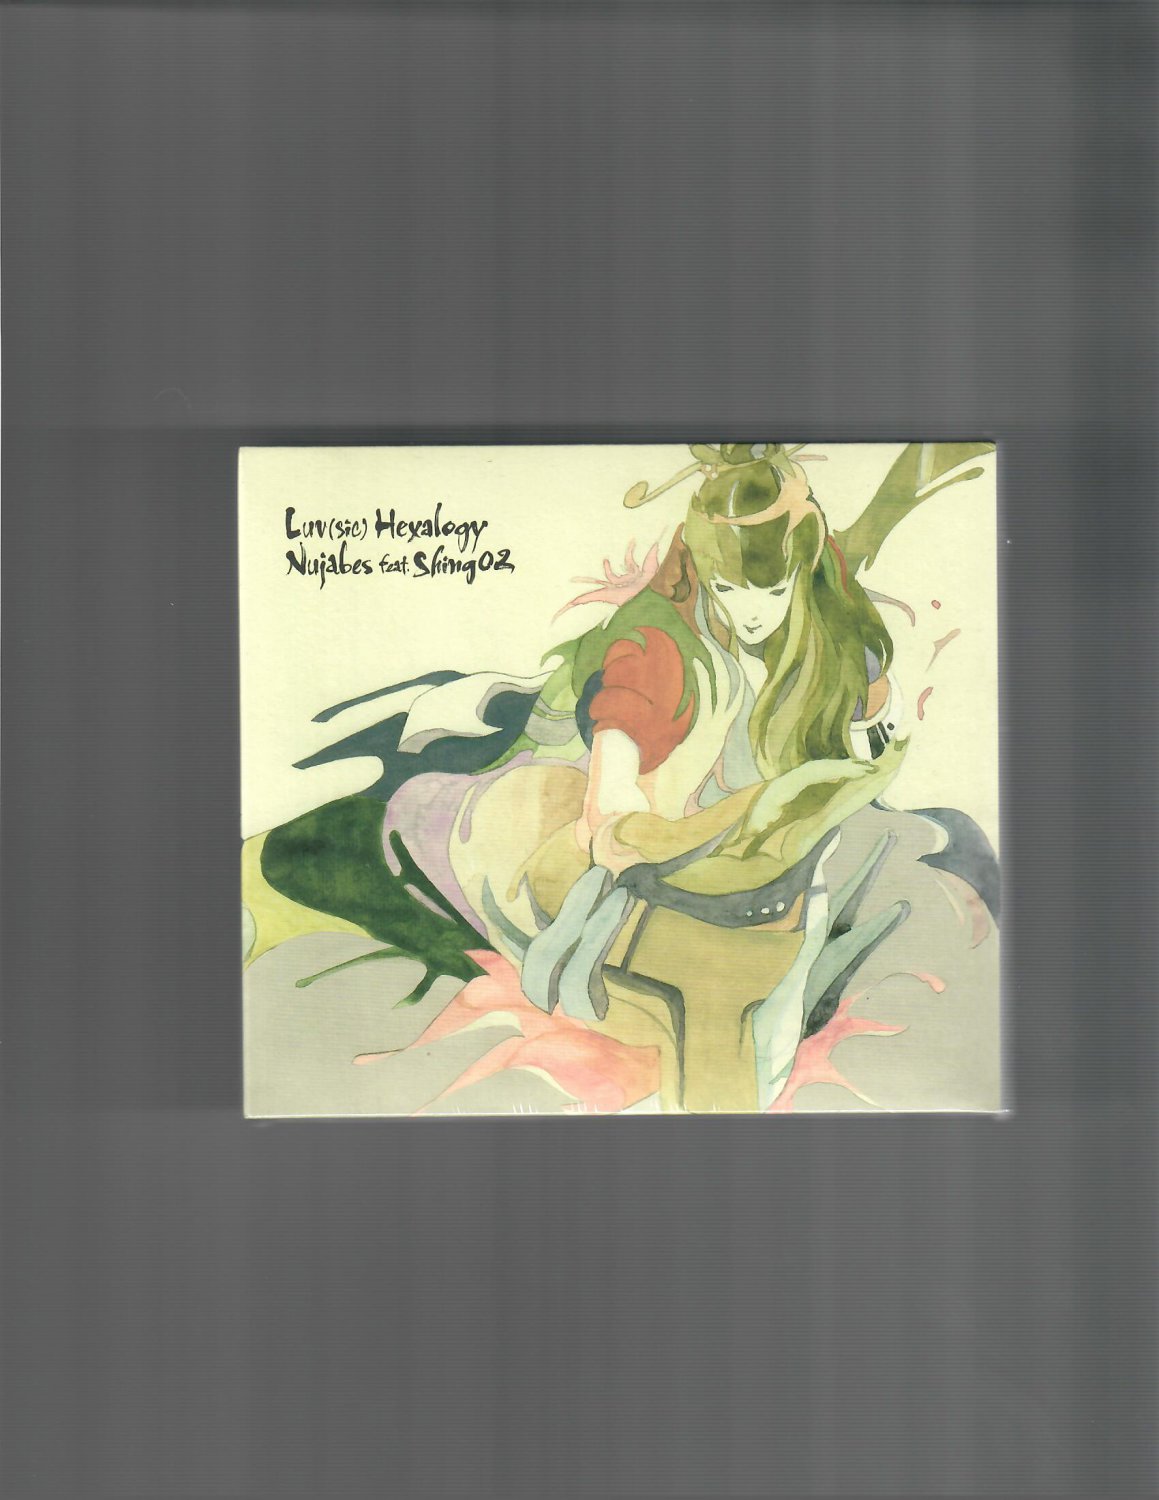 NUJABES "LUV (SIC) HEXALOGY" FEAT. SHINGO 02 JAPAN DIGIPAK 2xCD